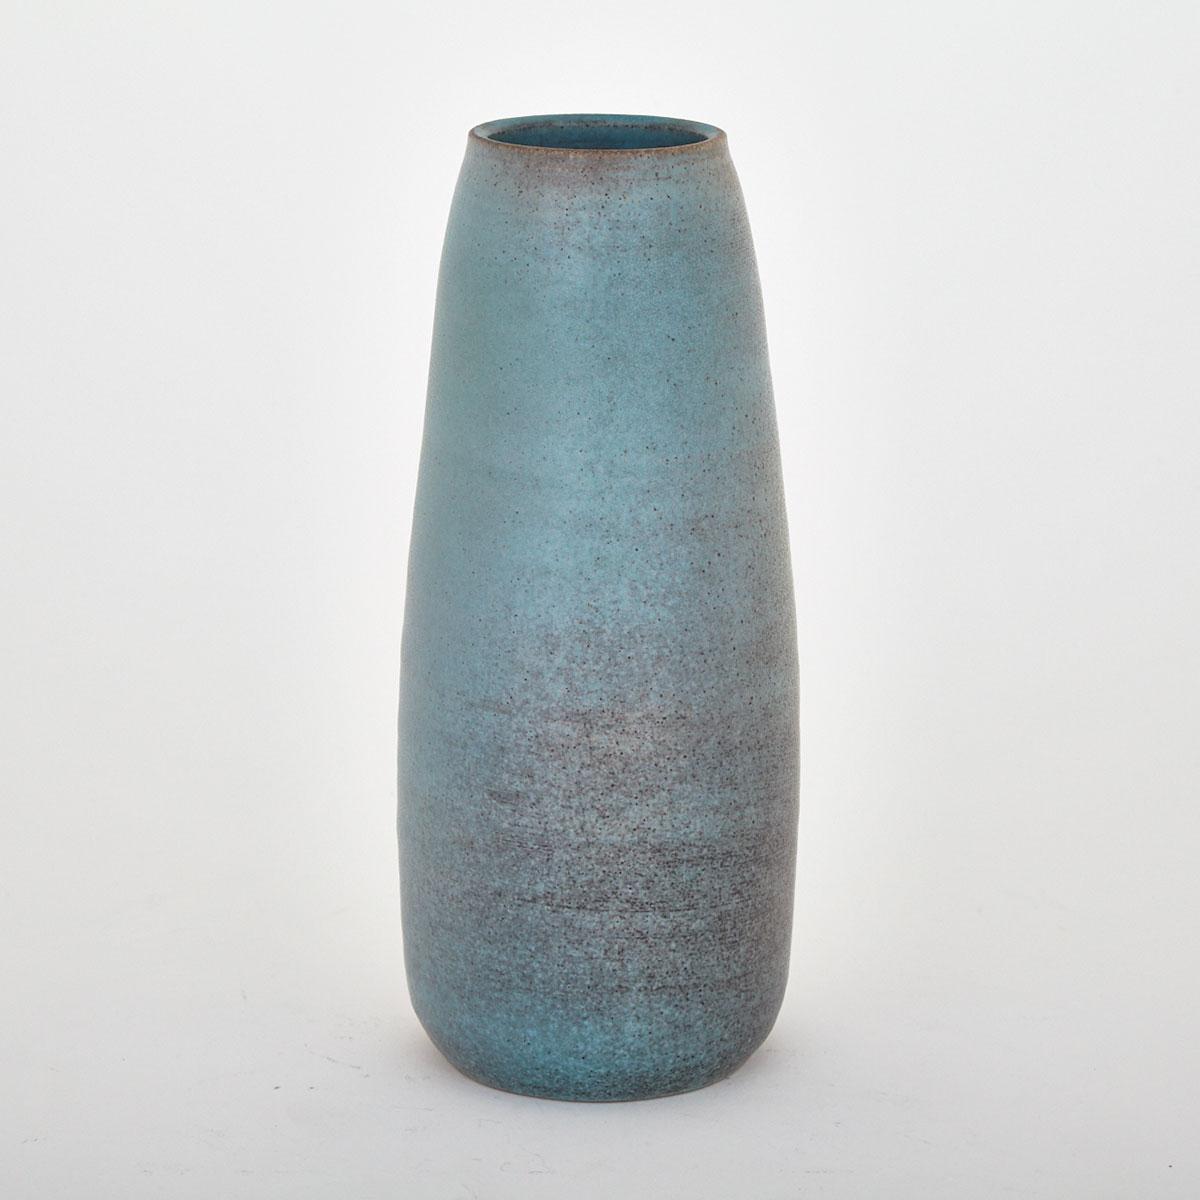 Deichmann Turquoise Glazed Vase, Kjeld & Erica Deichmann, c.1950